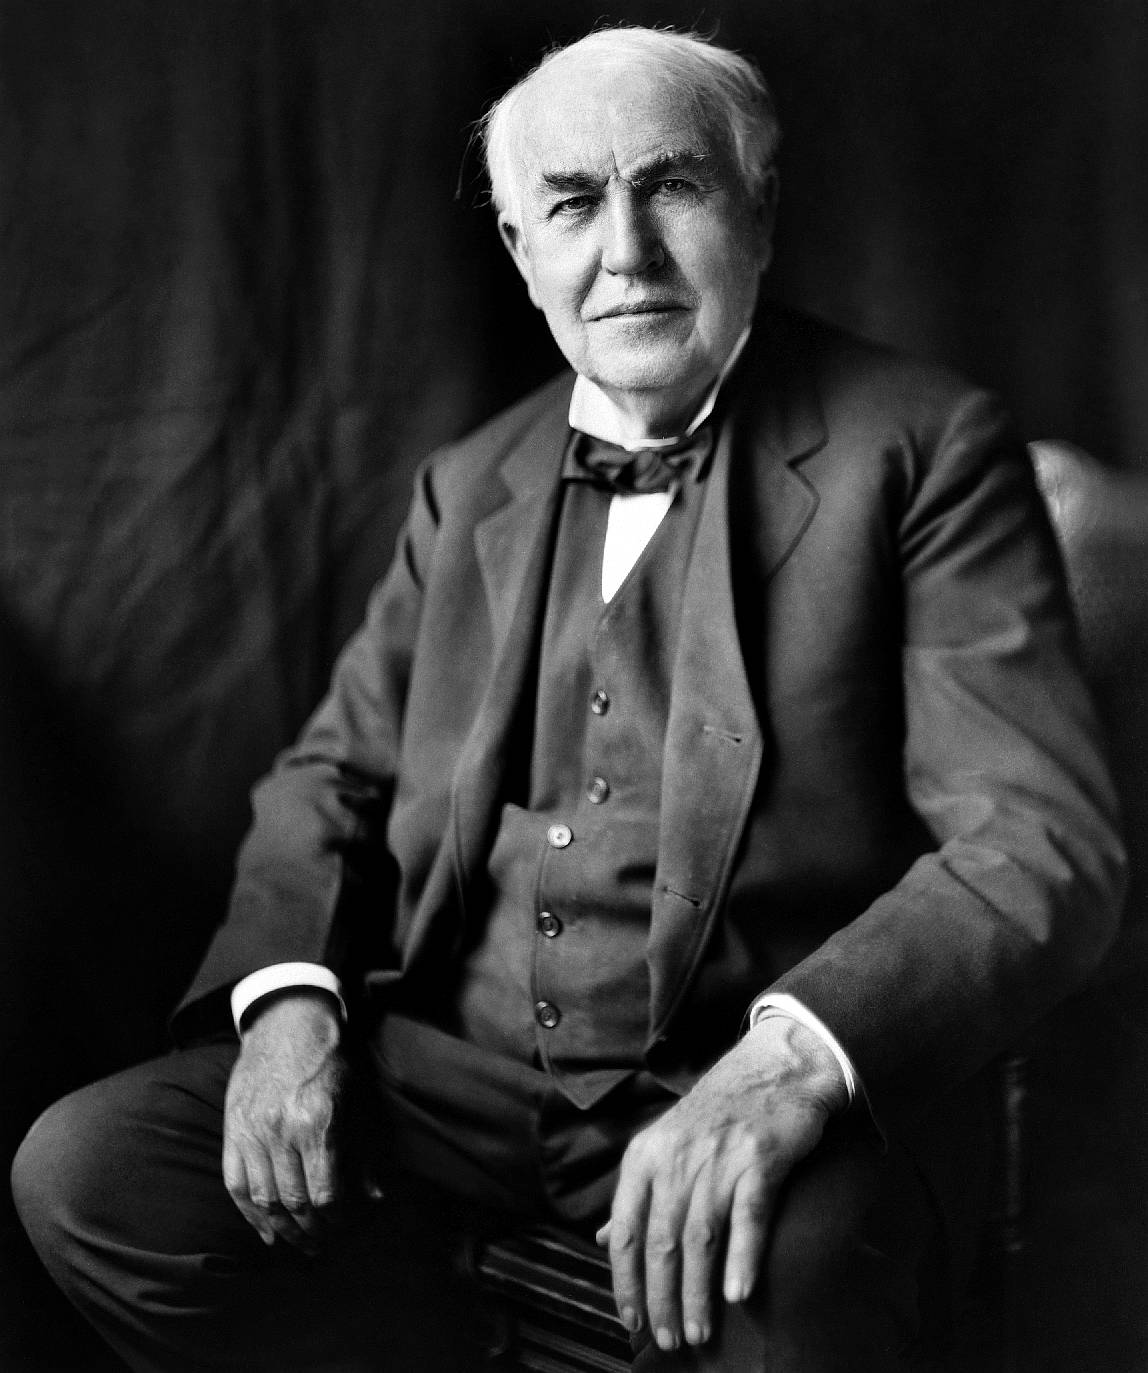 Thomas Edison's photo portrait